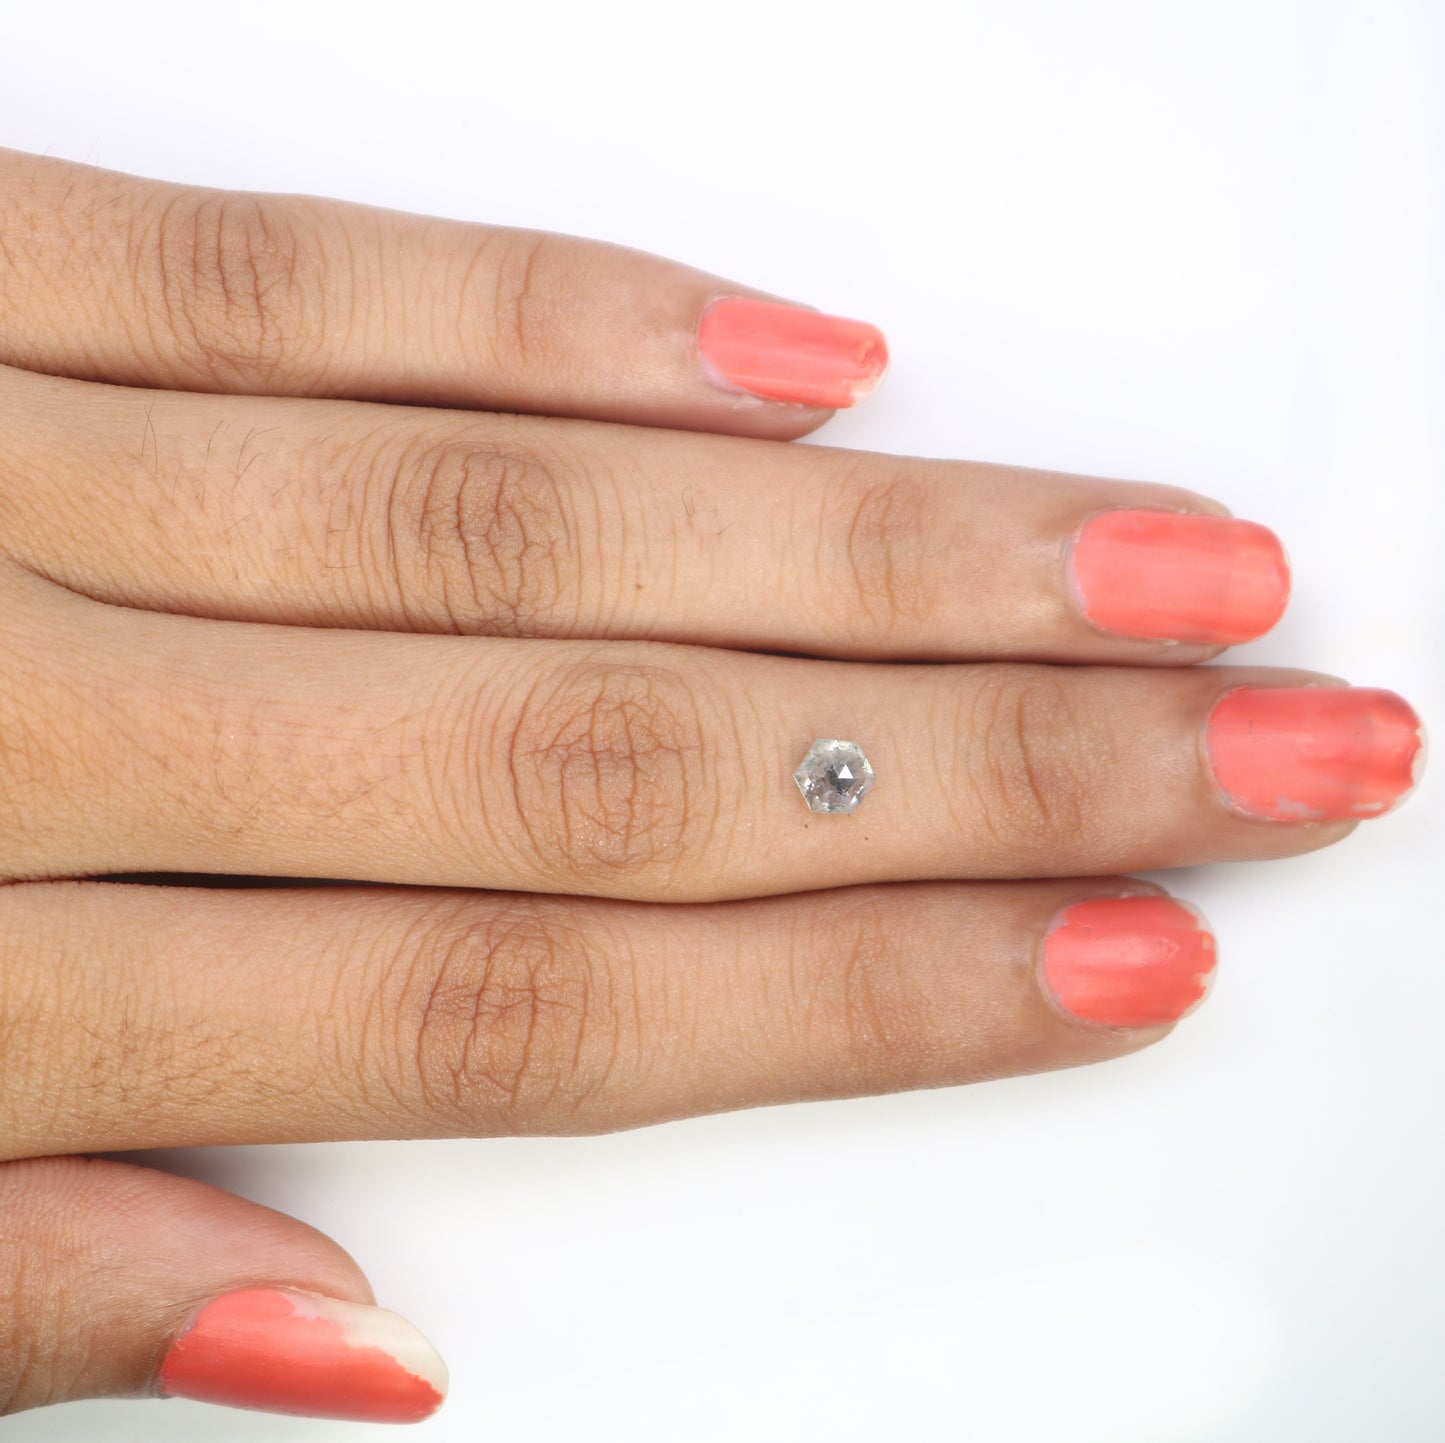 0.66 CT Hexagon Shape 5.40 MM Salt And Pepper Diamond For Engagement Ring